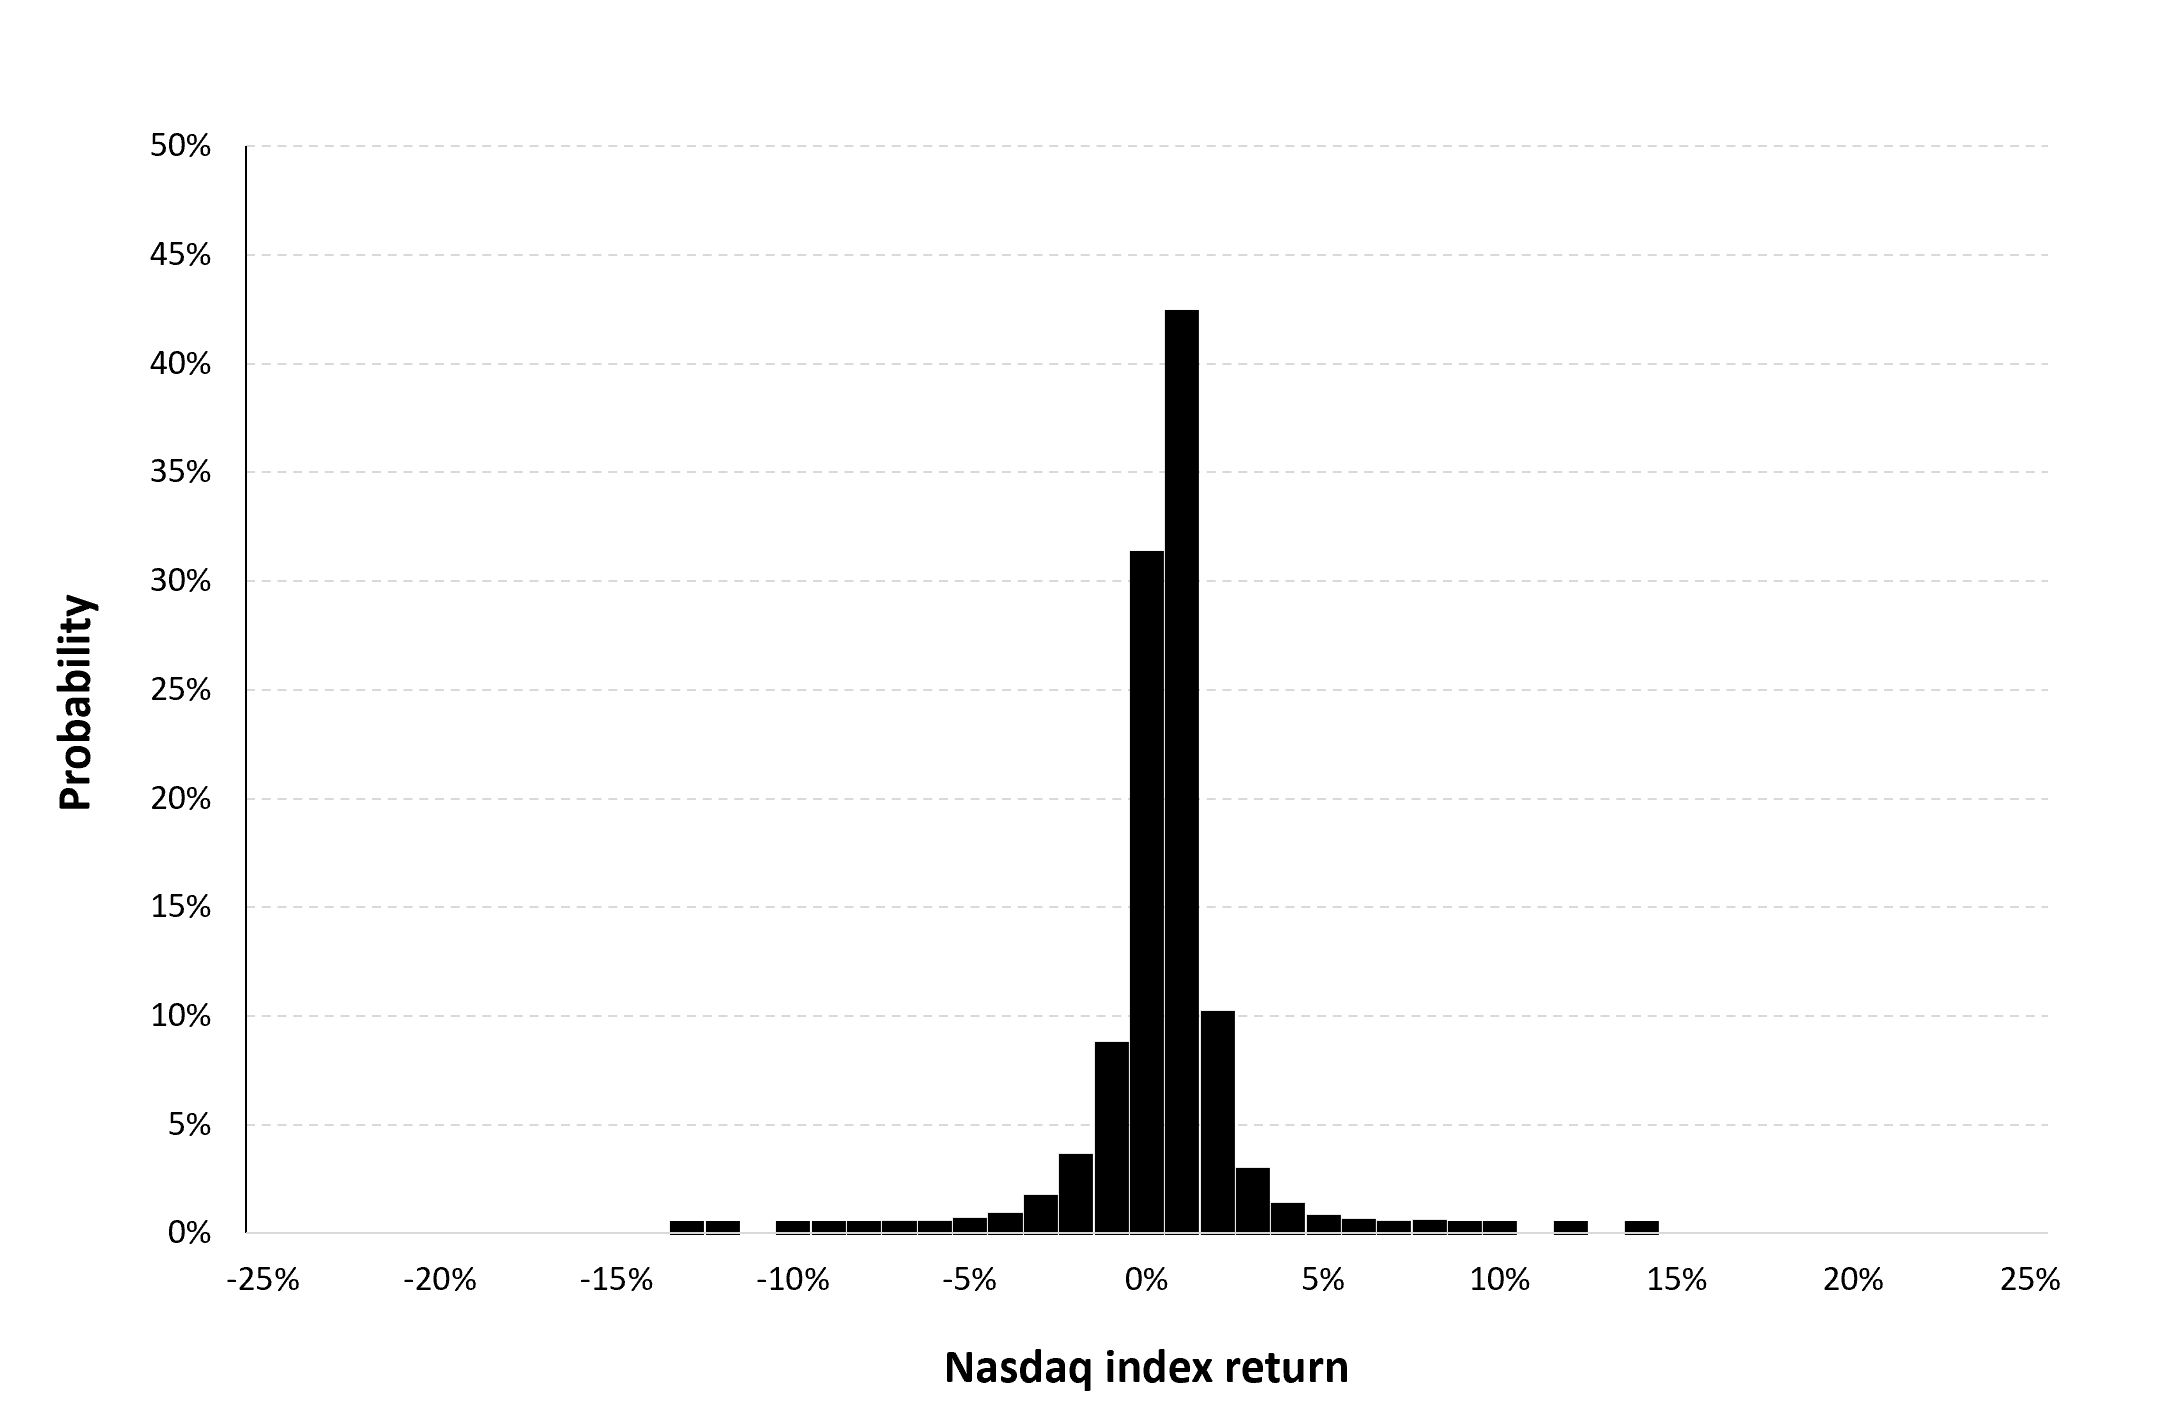 Historical distribution of the daily Nasdaq index returns